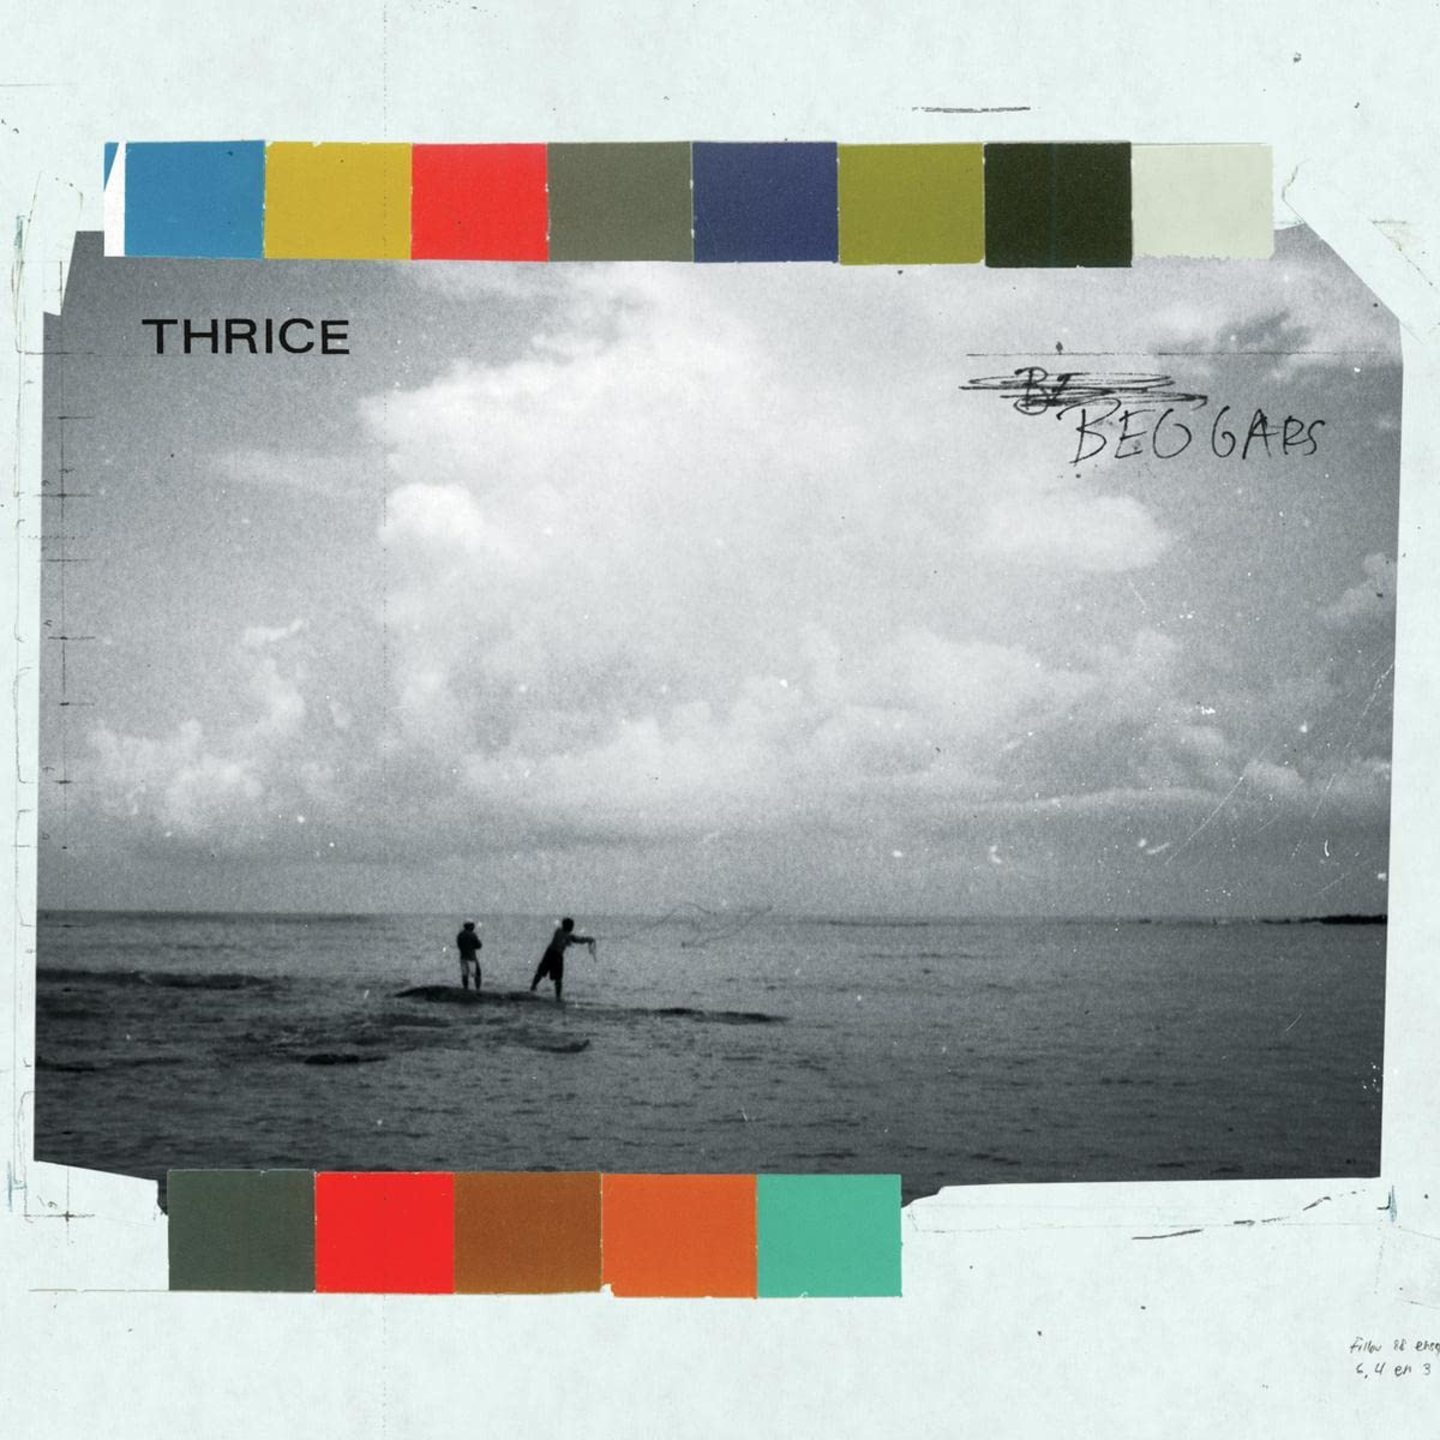 THRICE - Beggars LP Colour vinyl